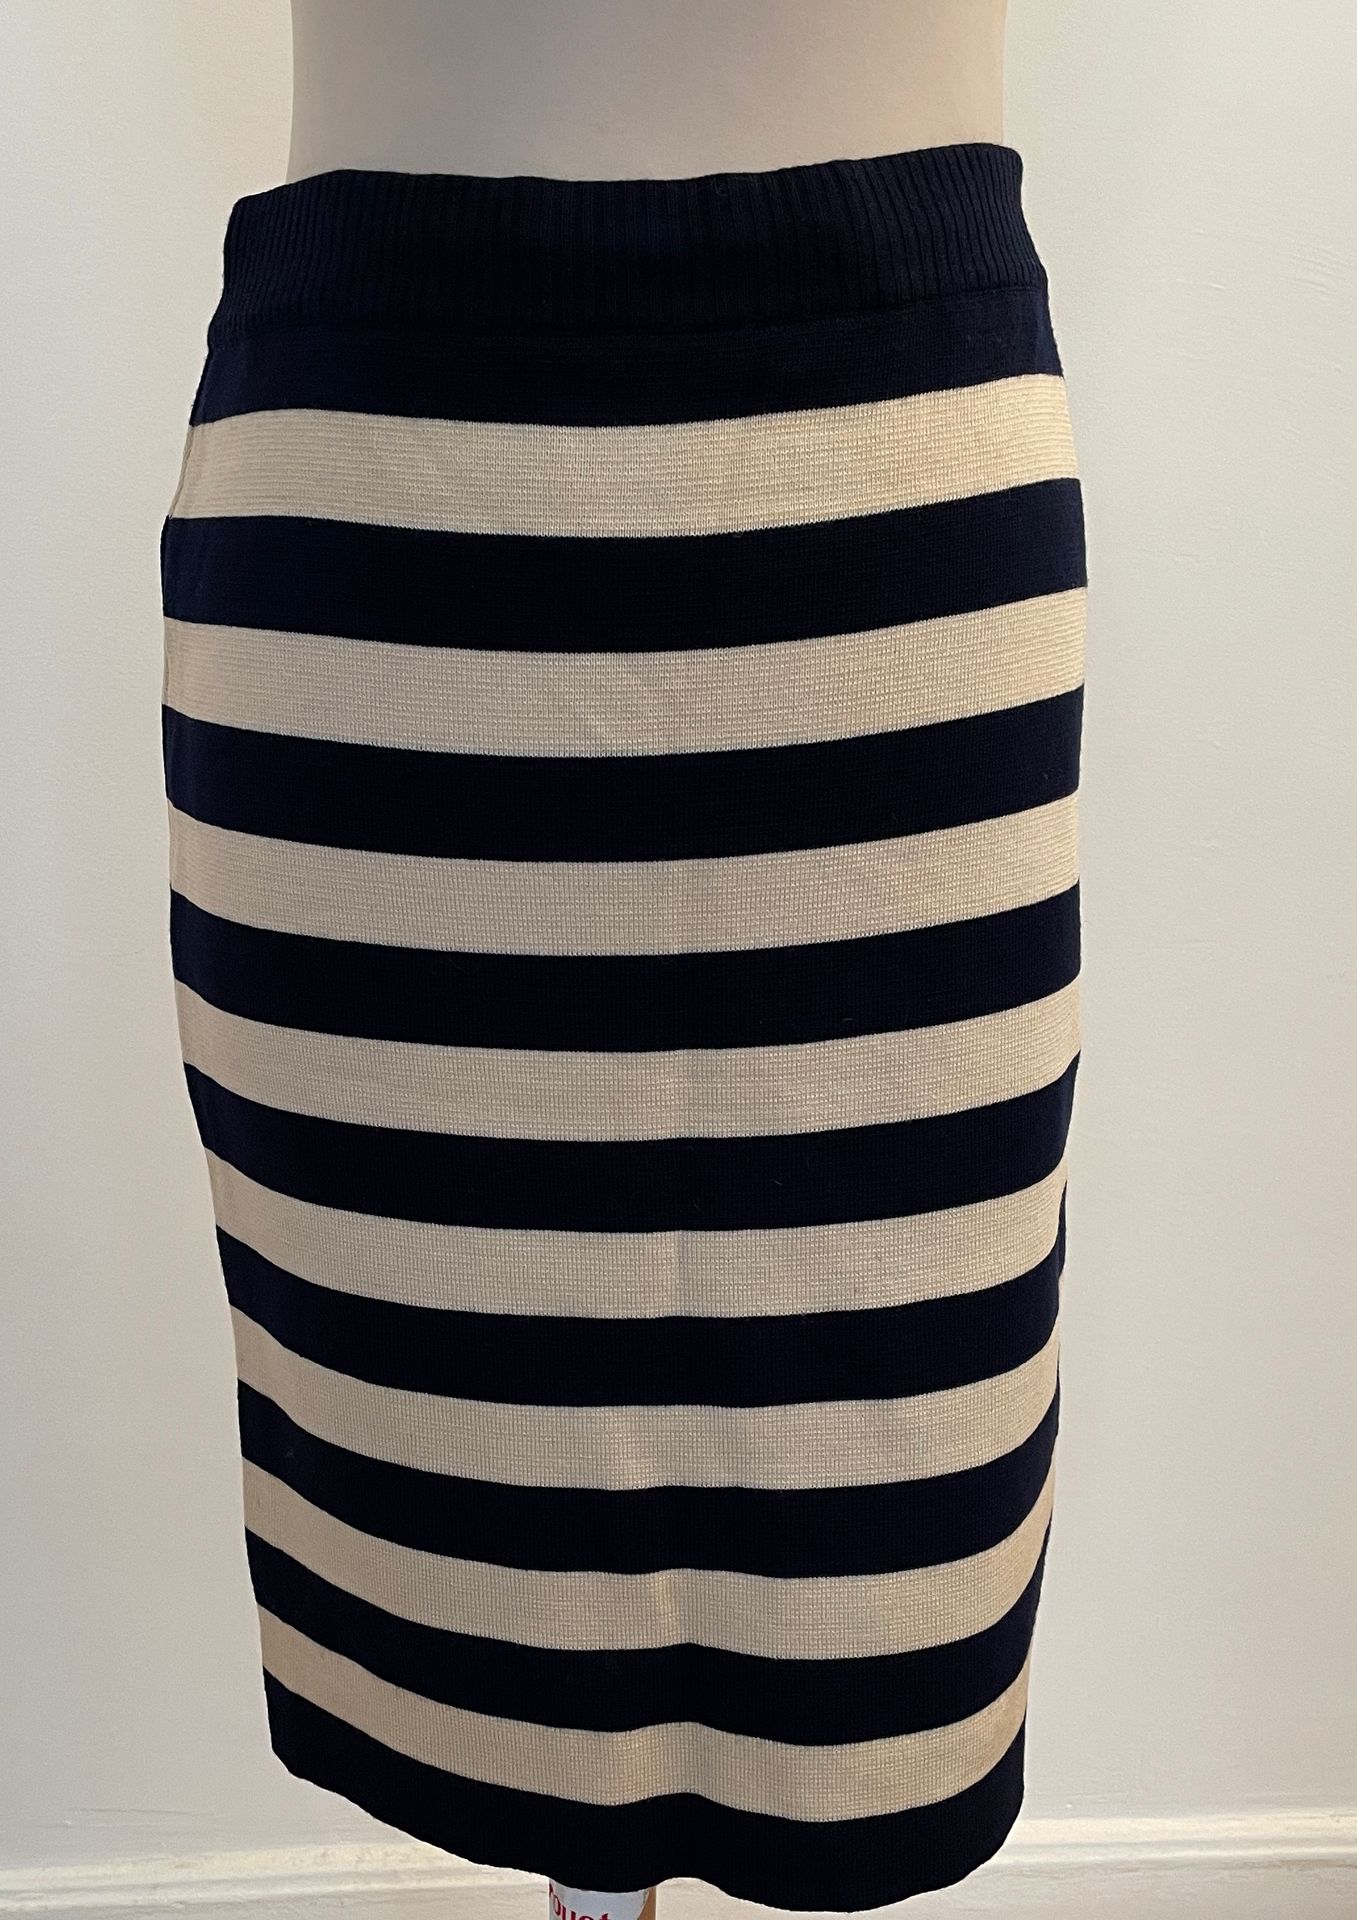 Null YVES SAINT LAURENT的变化

白色和蓝色条纹针织的管状裙。

腰部宽度34厘米，腰部至底部高度57厘米，底部宽度40厘米